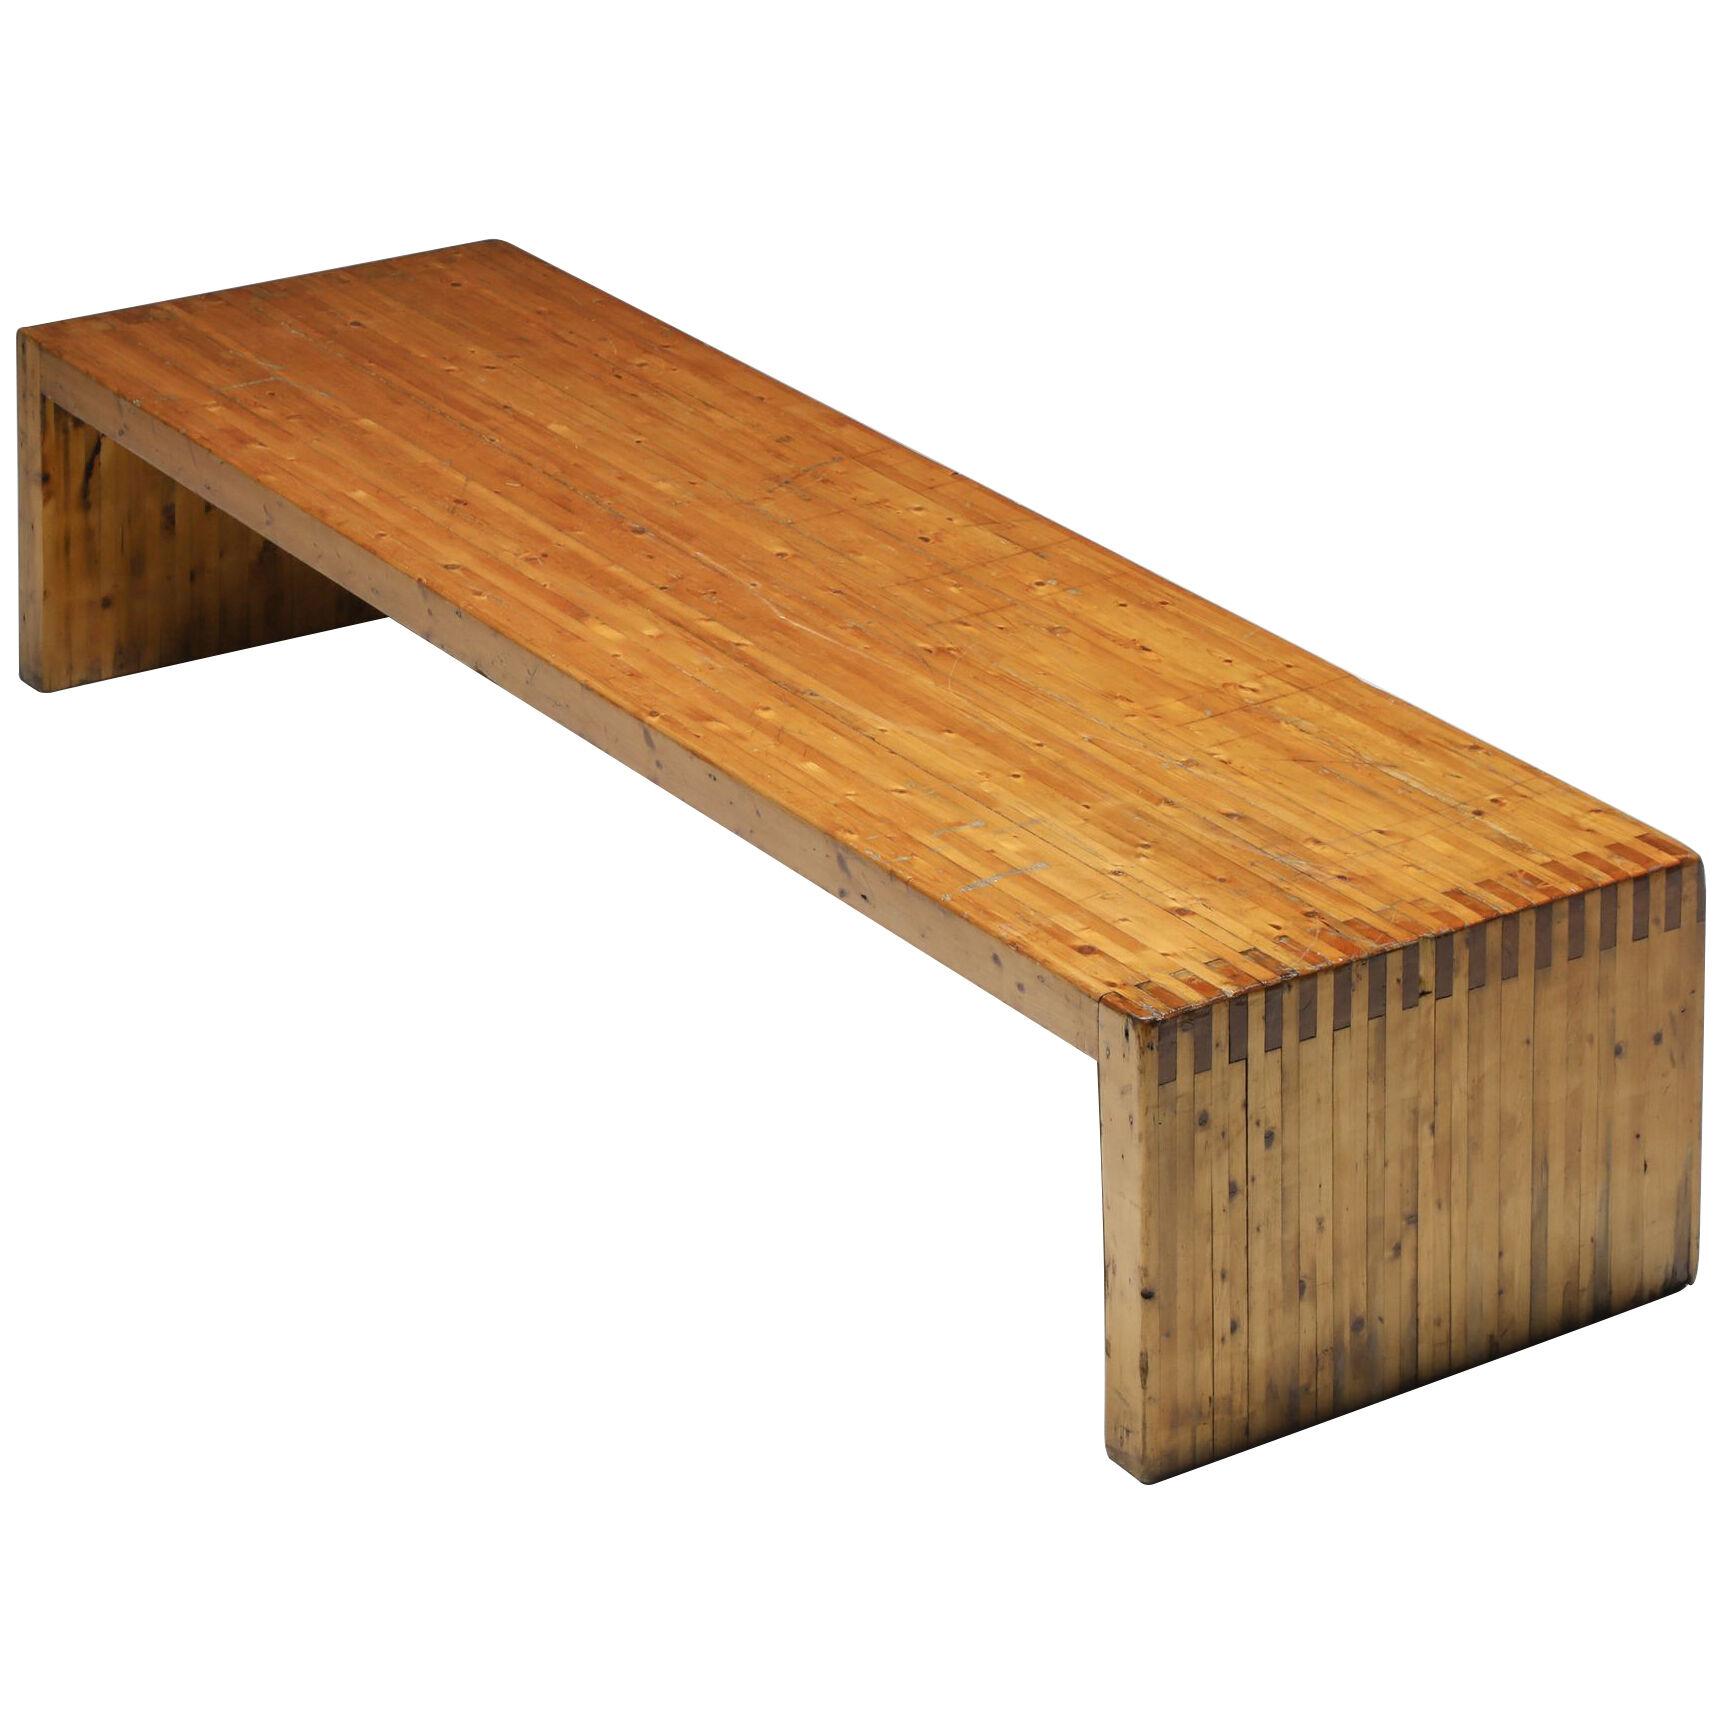 Modernist Wooden Bench - 1930's